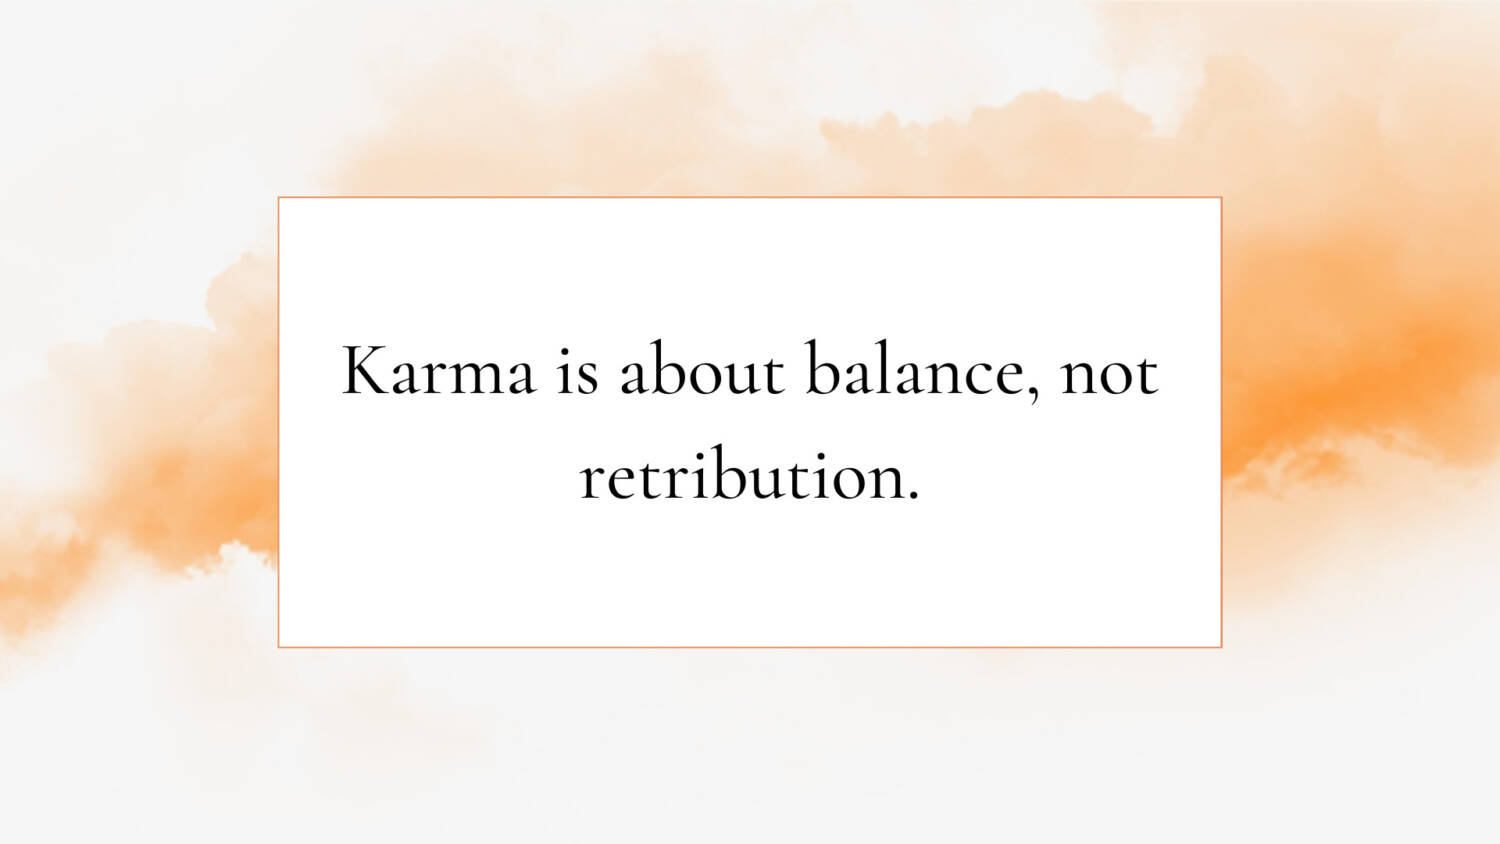 Karma is about balance, not retribution.